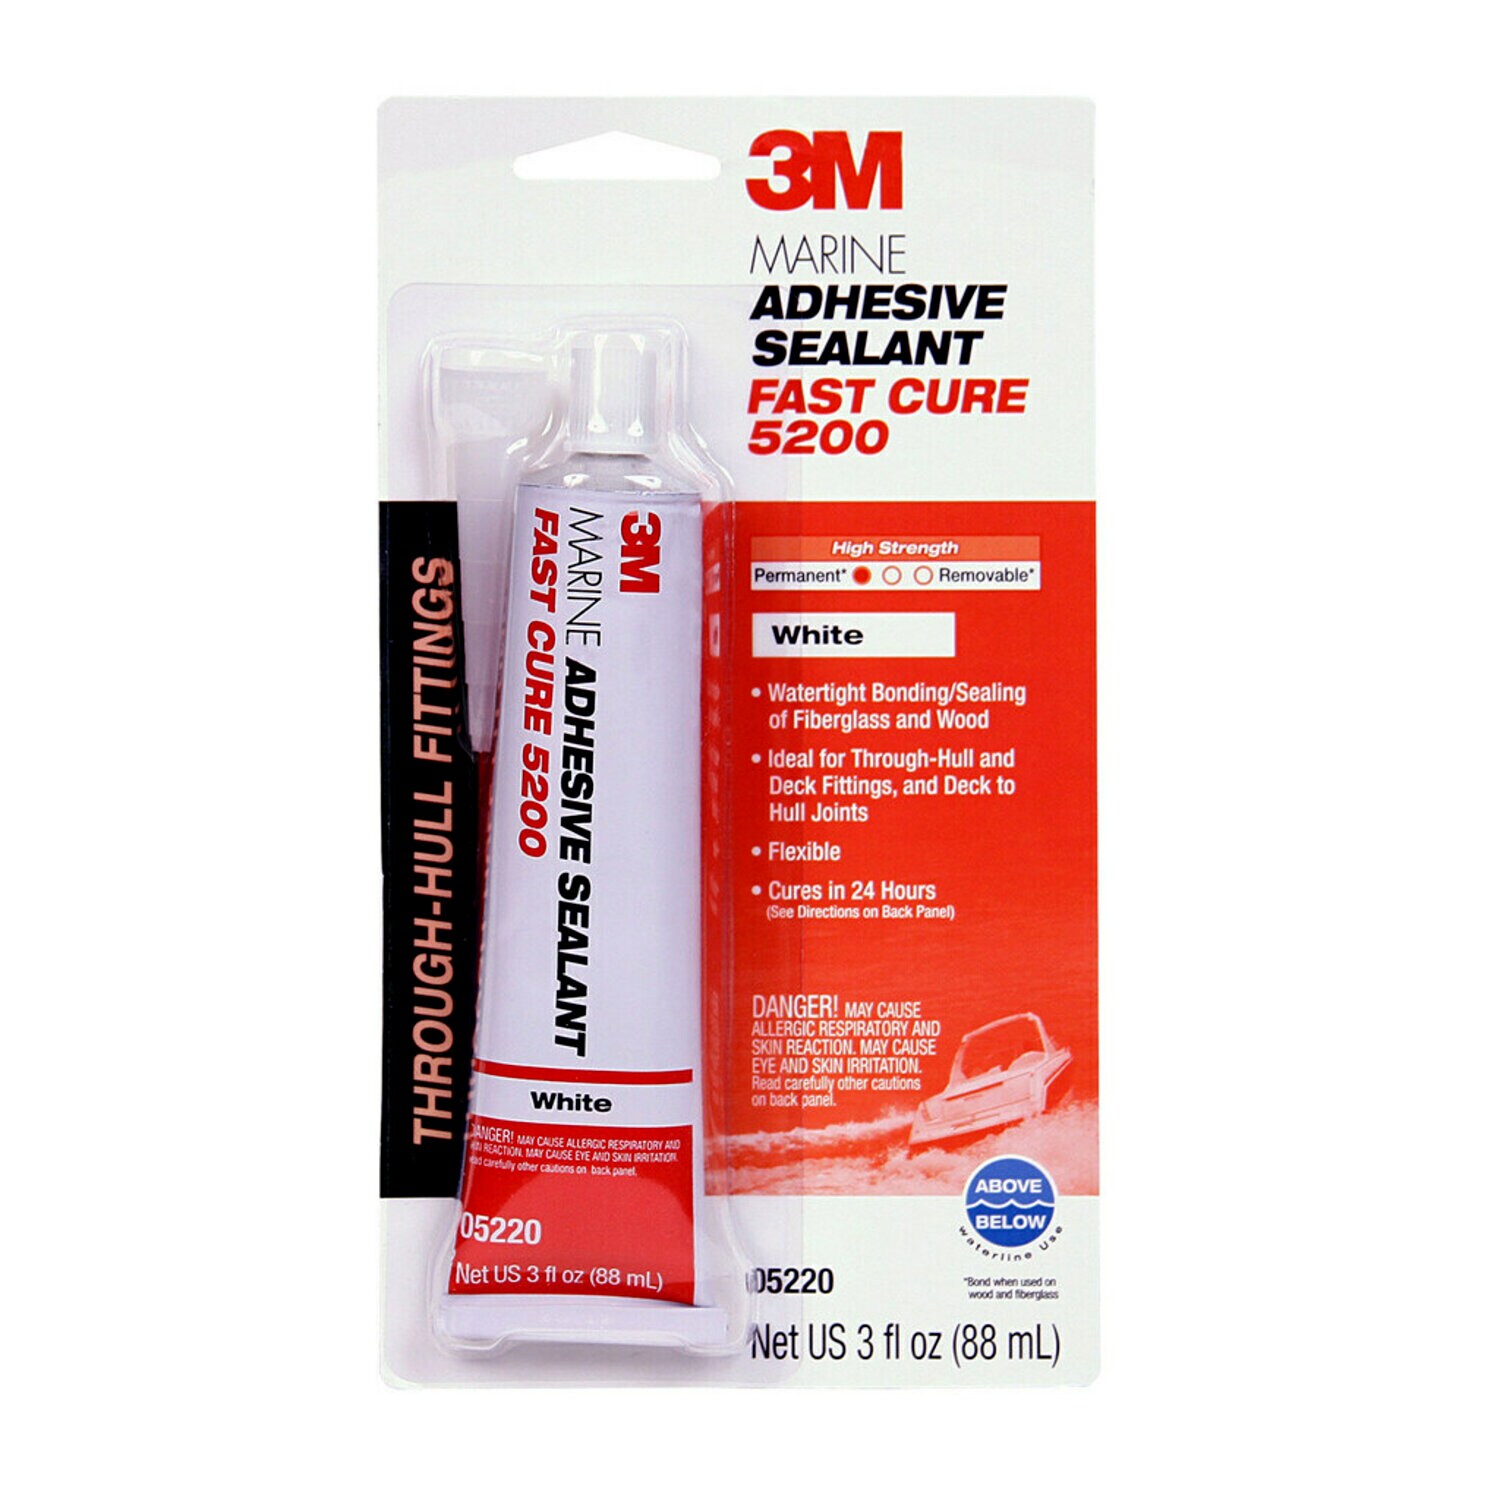 7000120490 - 3M Marine Adhesive Sealant 5200FC, Fast Cure, White, 3 oz Tube, 6/Case